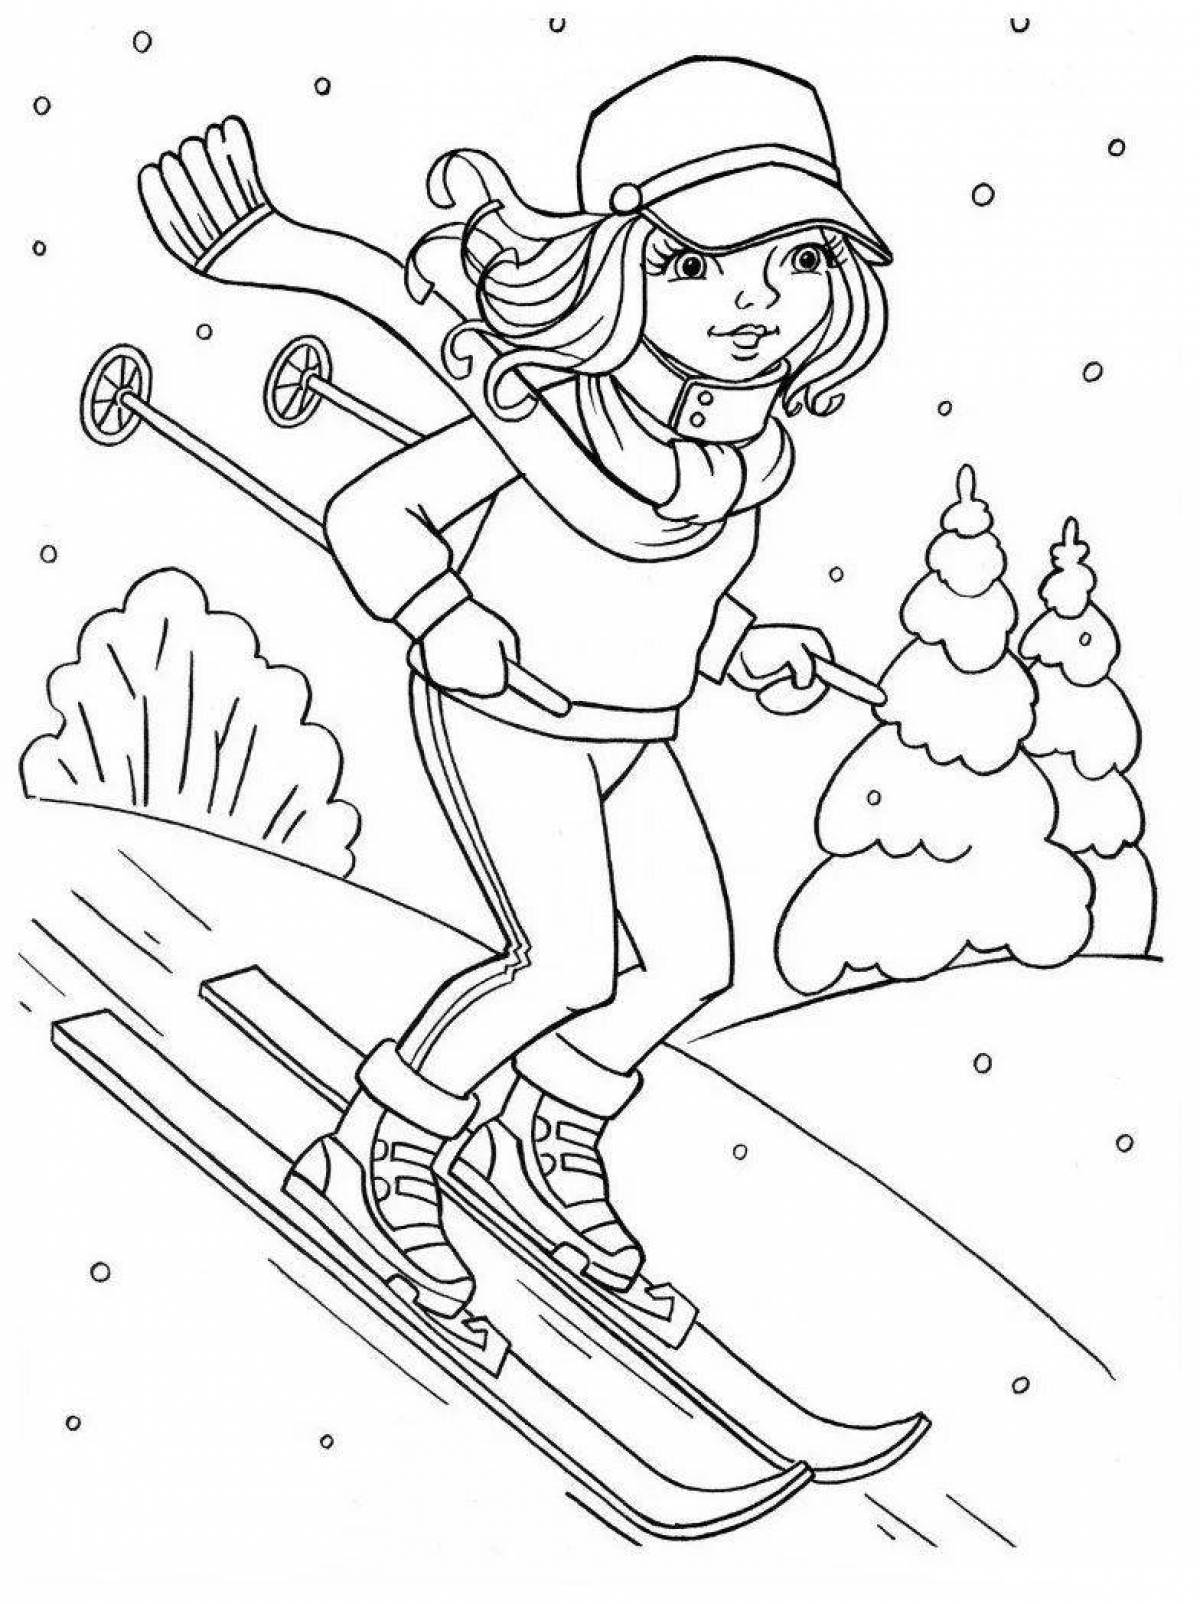 Child on skis #9